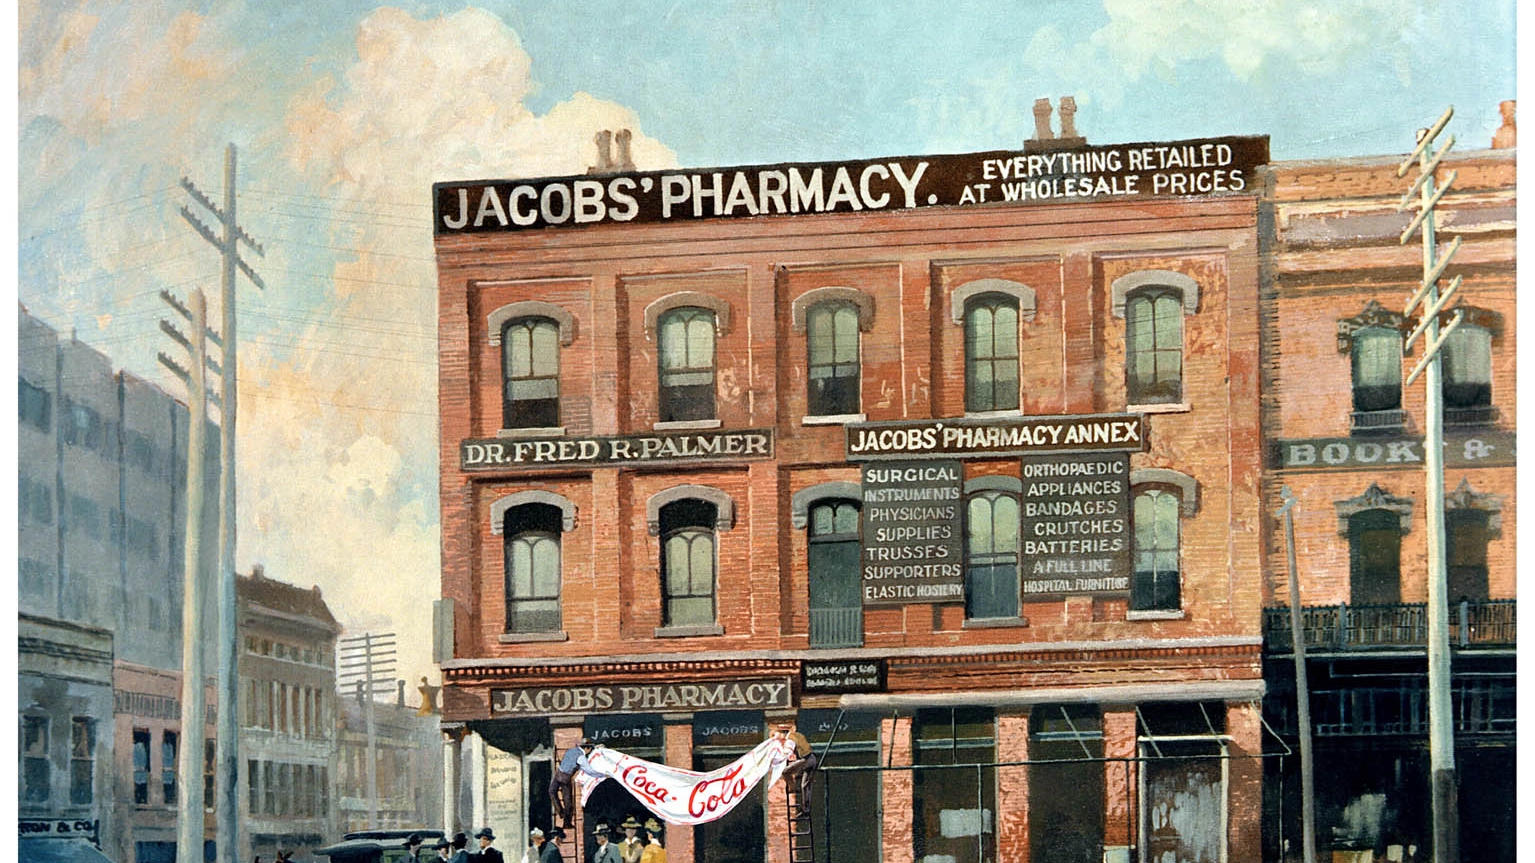 La Jacob's Pharmacy dove fu venduta per la prima volta la Coca-Cola